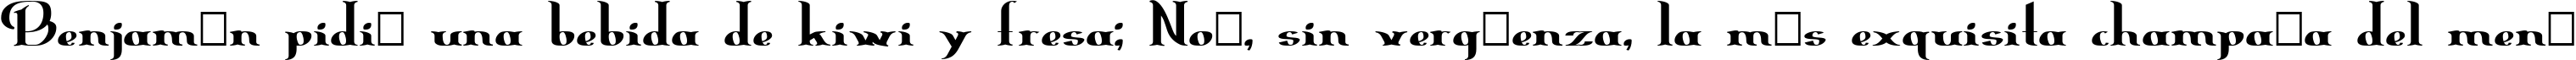 Пример написания шрифтом ErasmusInline текста на испанском